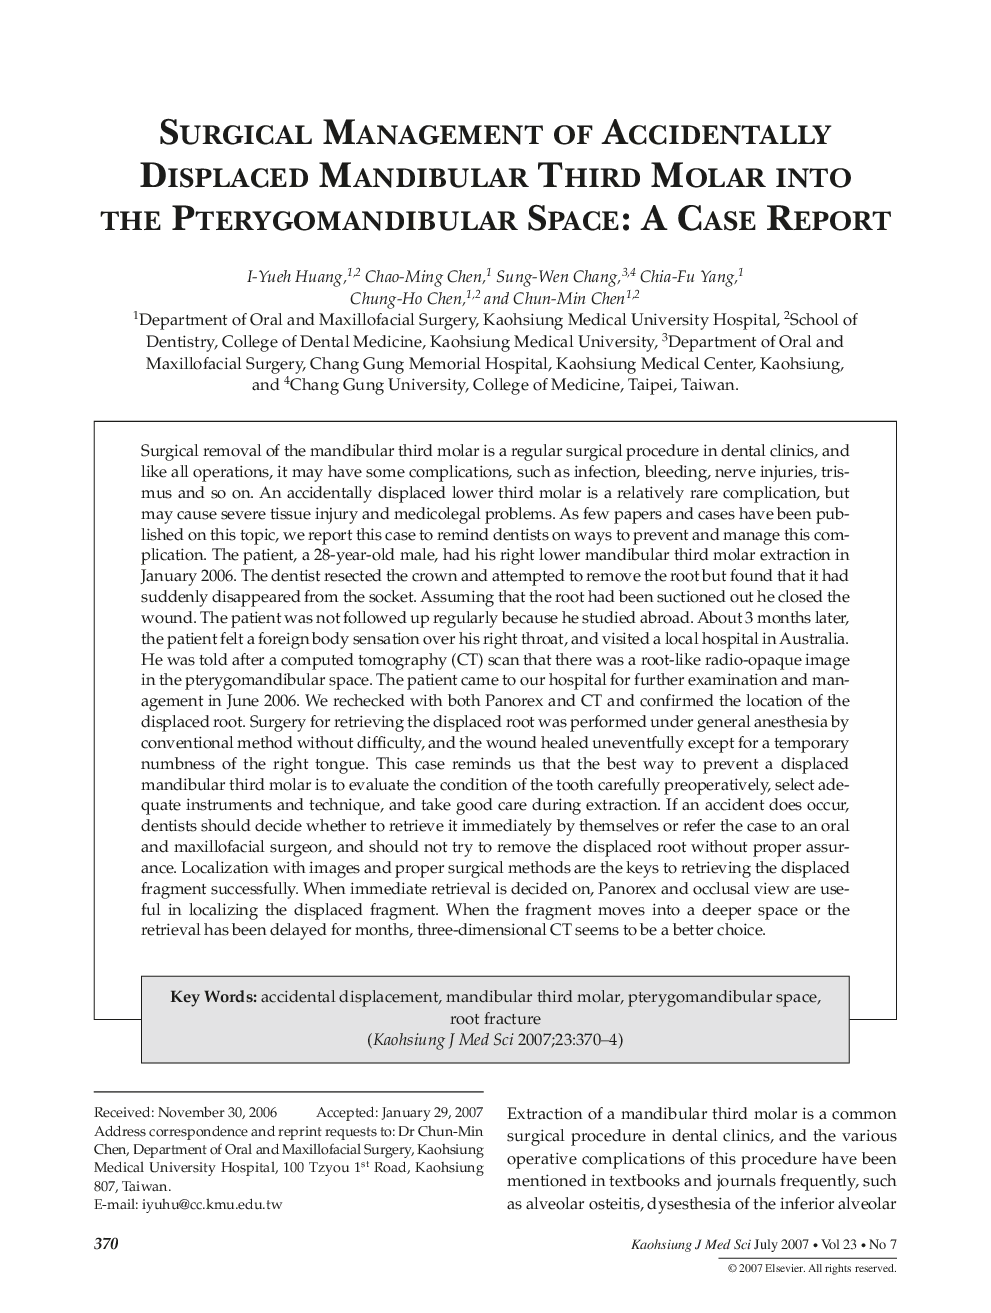 Surgical Management of Accidentally Displaced Mandibular Third Molar into the Pterygomandibular Space: A Case Report